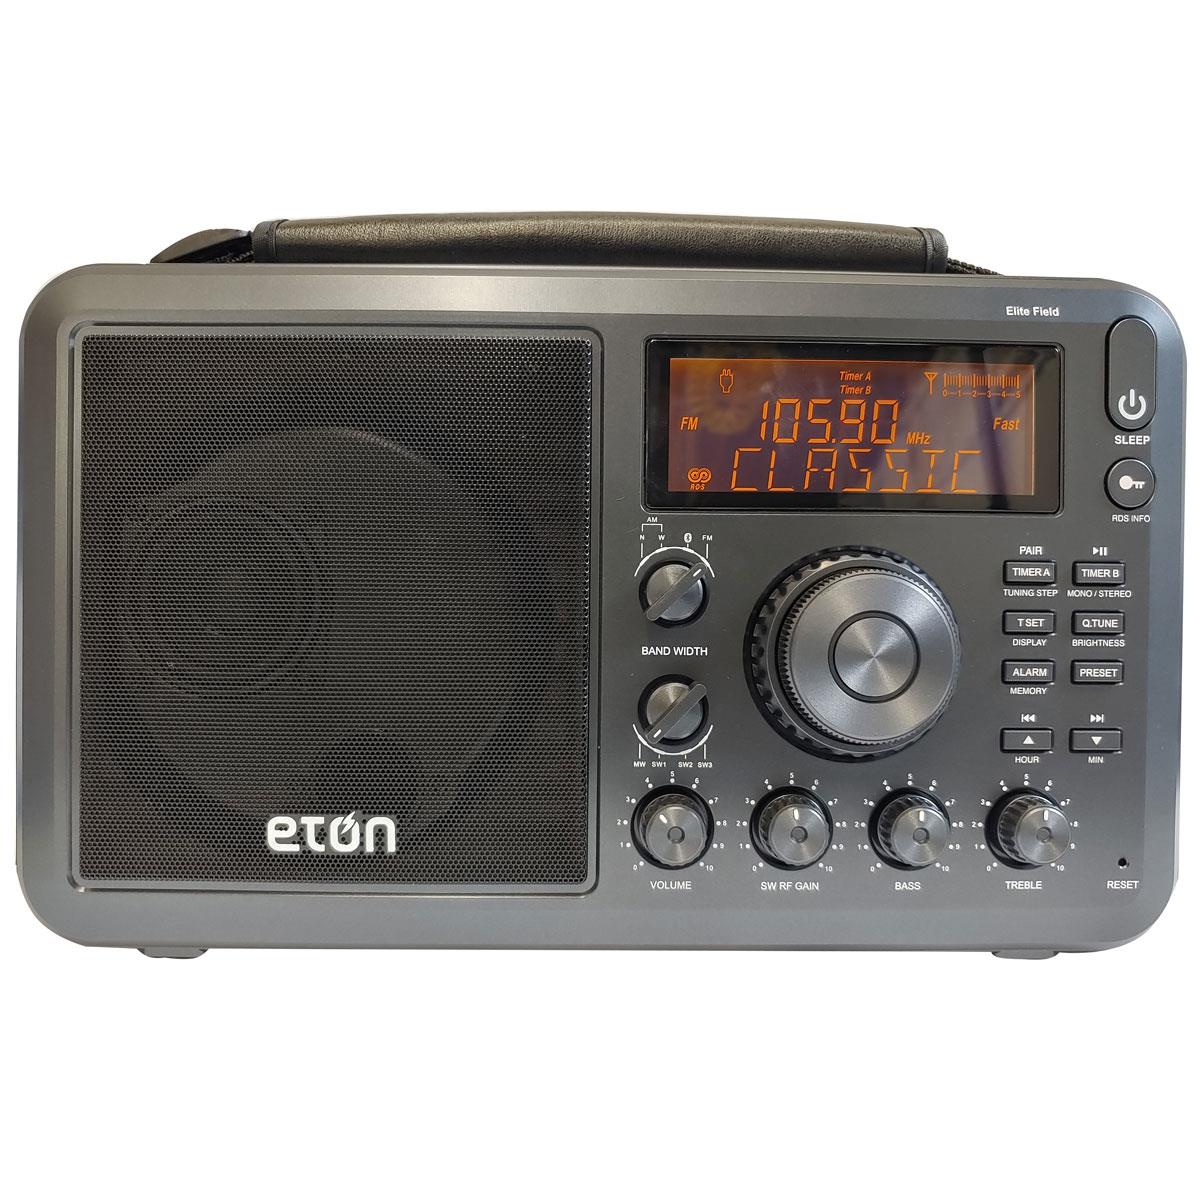 Image of Eton Elite Field AM/FM/Shortwave Radio with Bluetooth Streaming